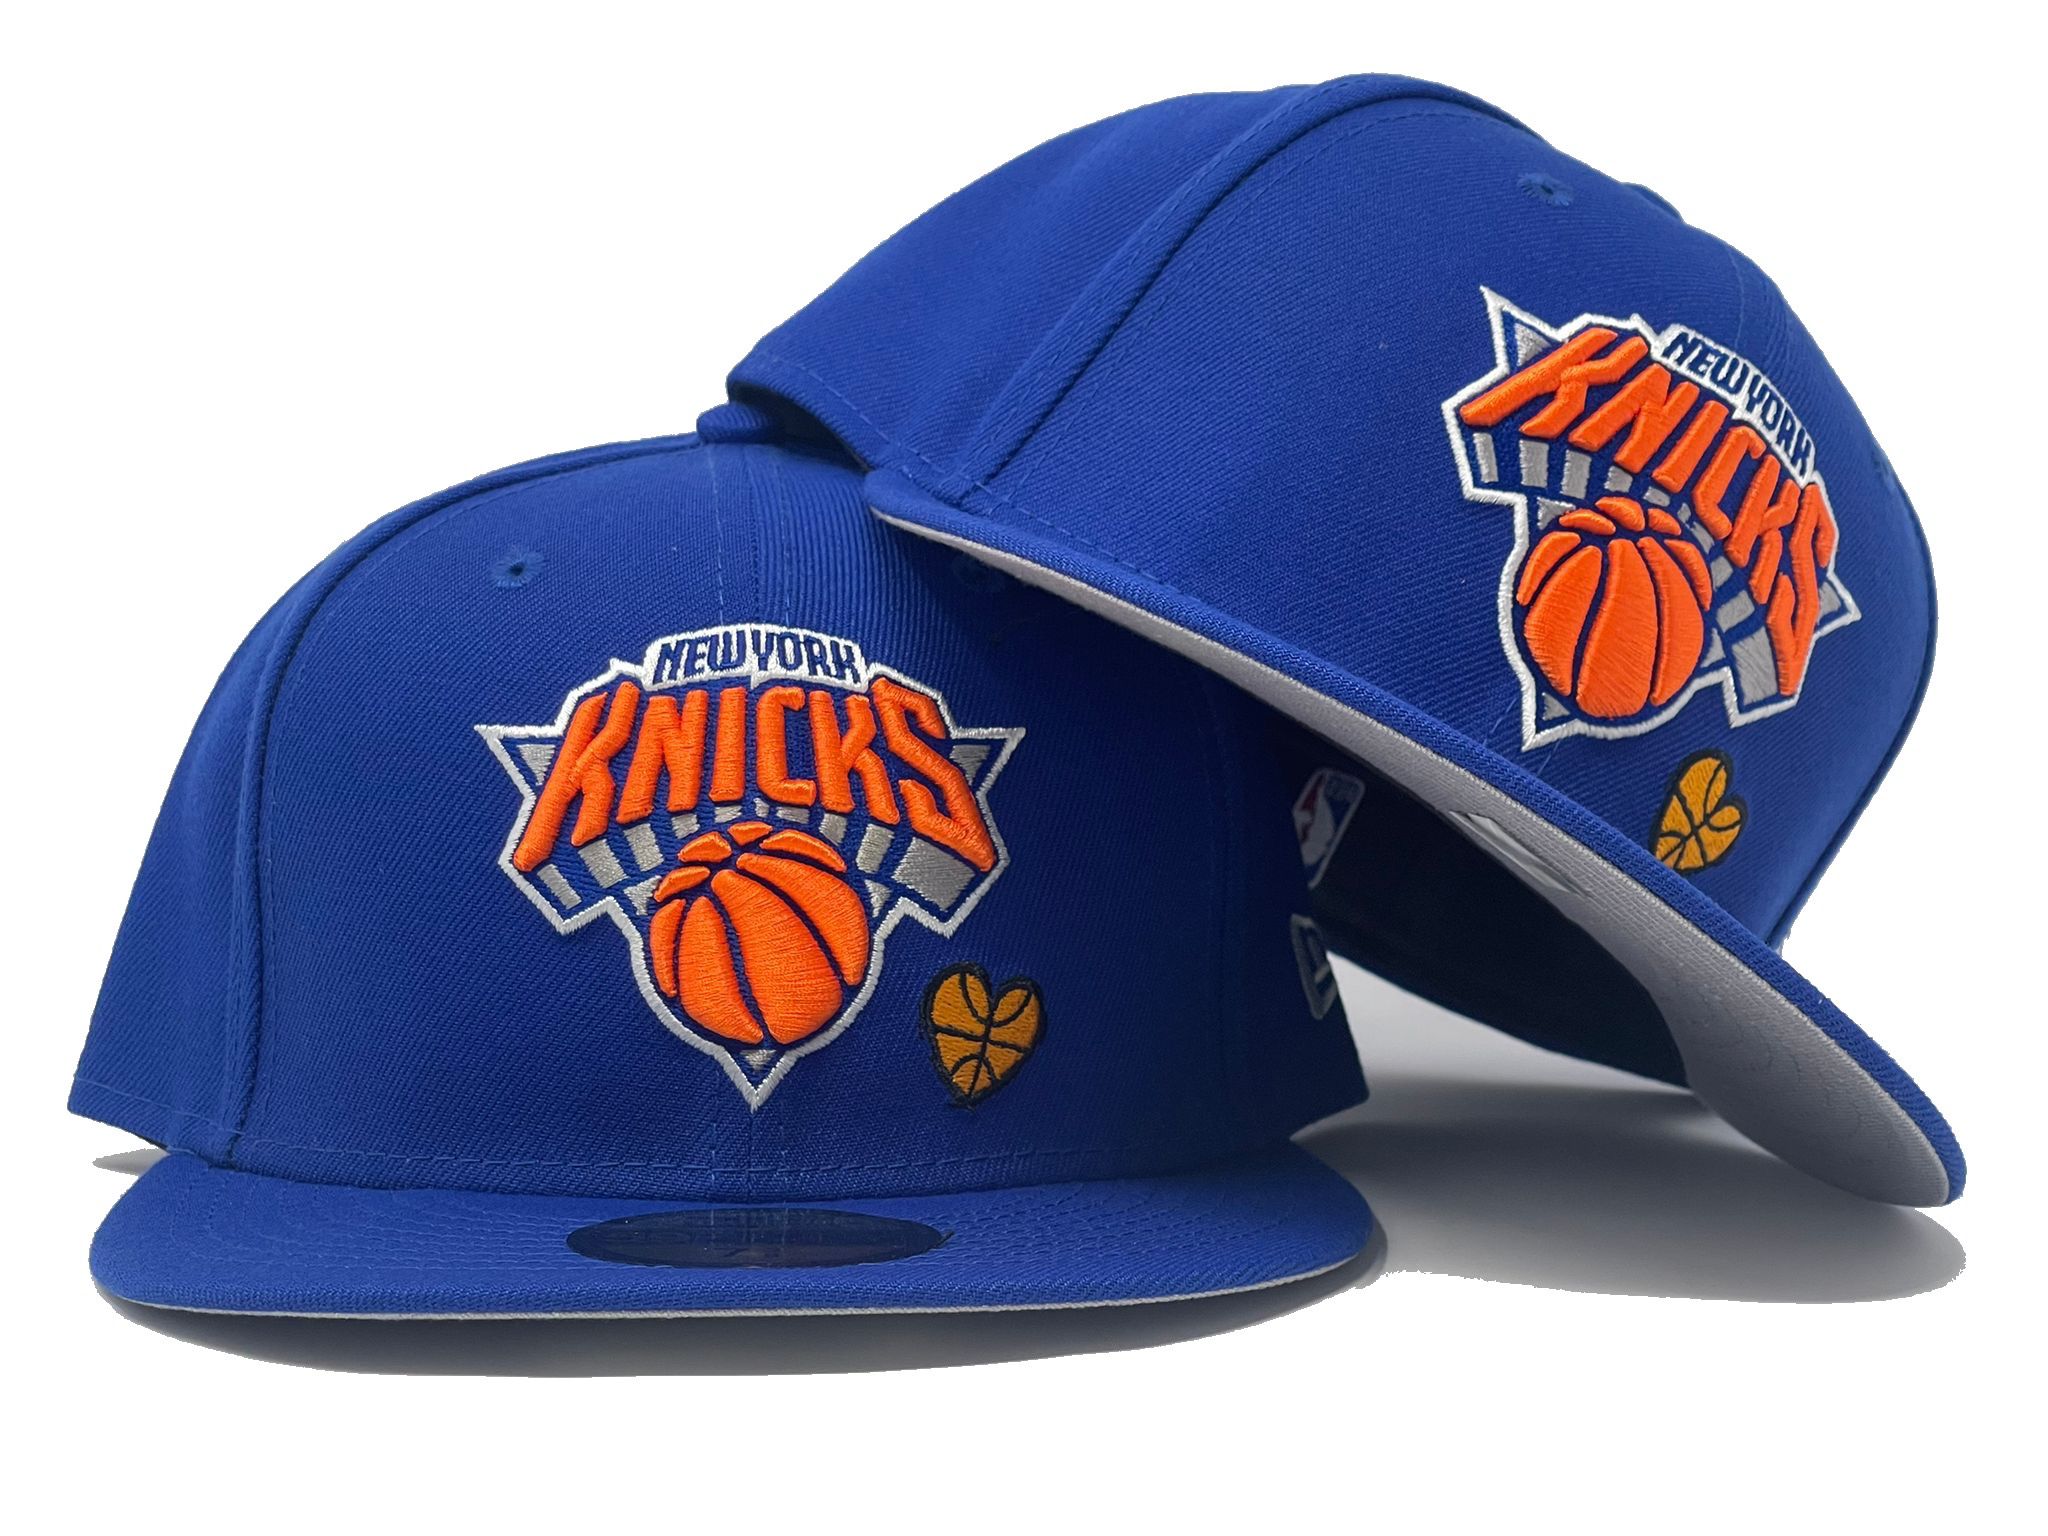 New York Knicks Hats in New York Knicks Team Shop 